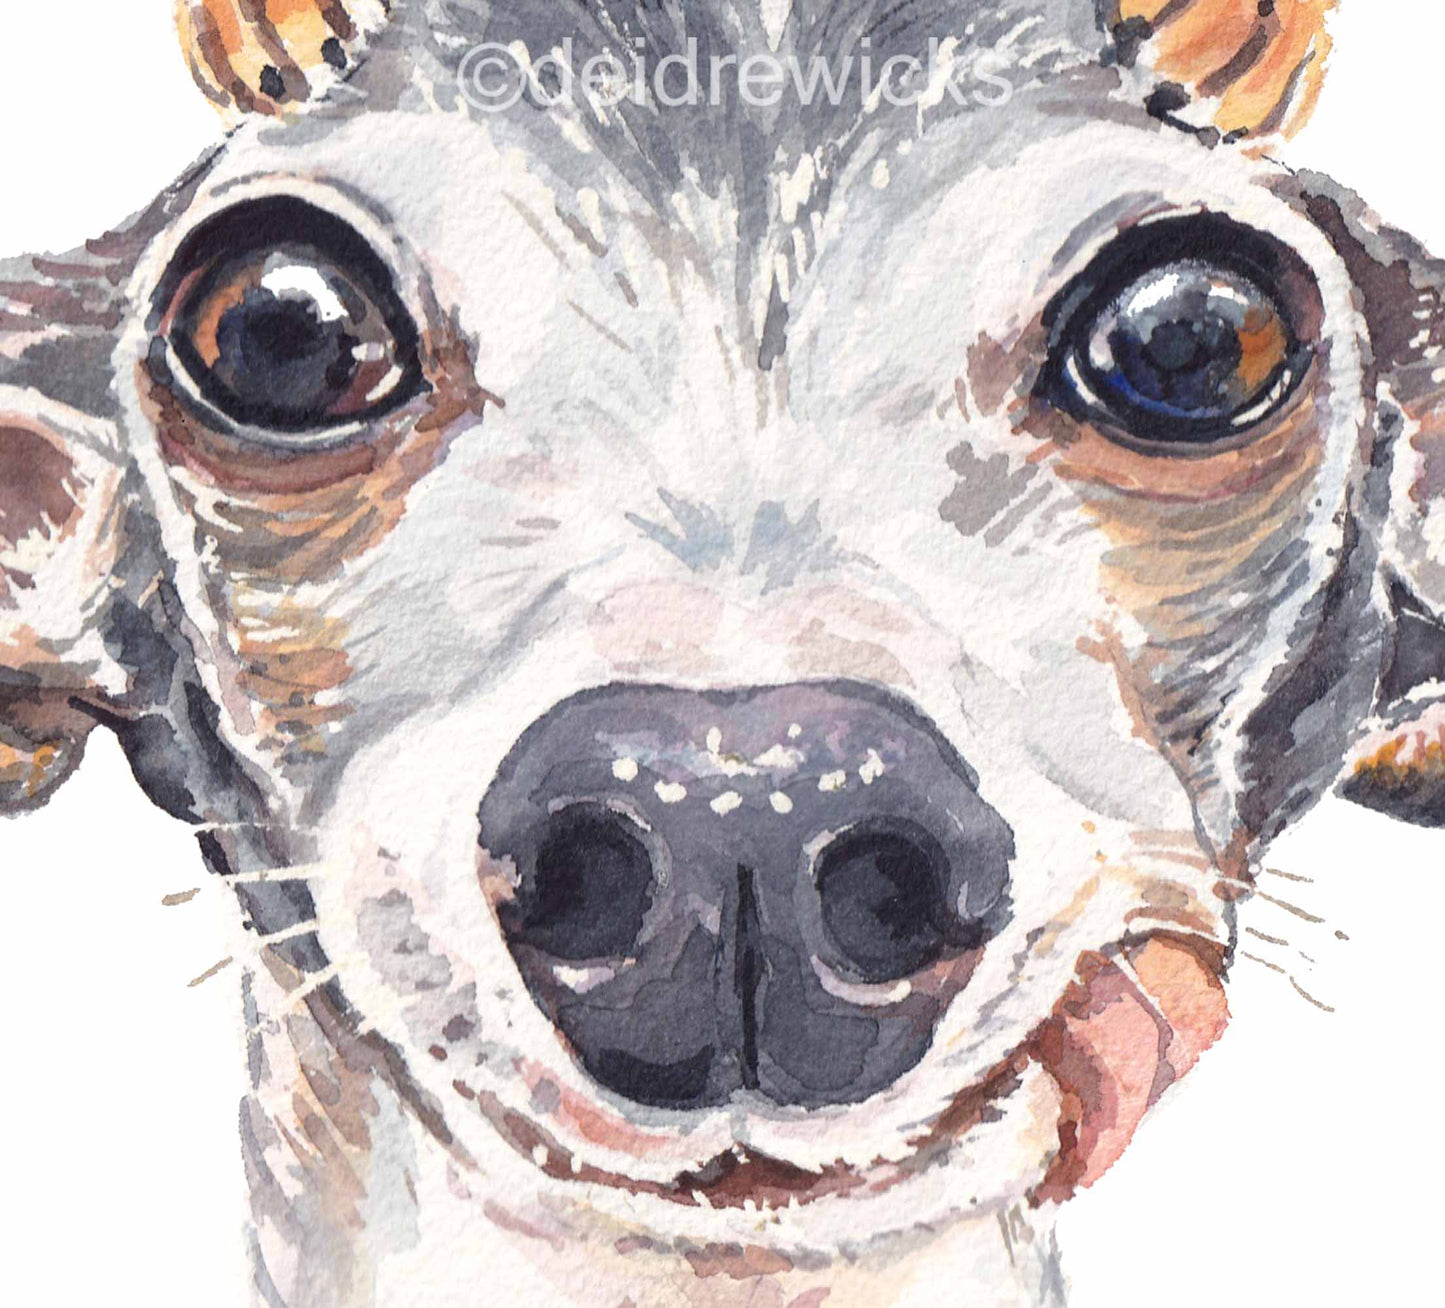 Close up of an Italian greyhound dog's face by Deidre Wicks